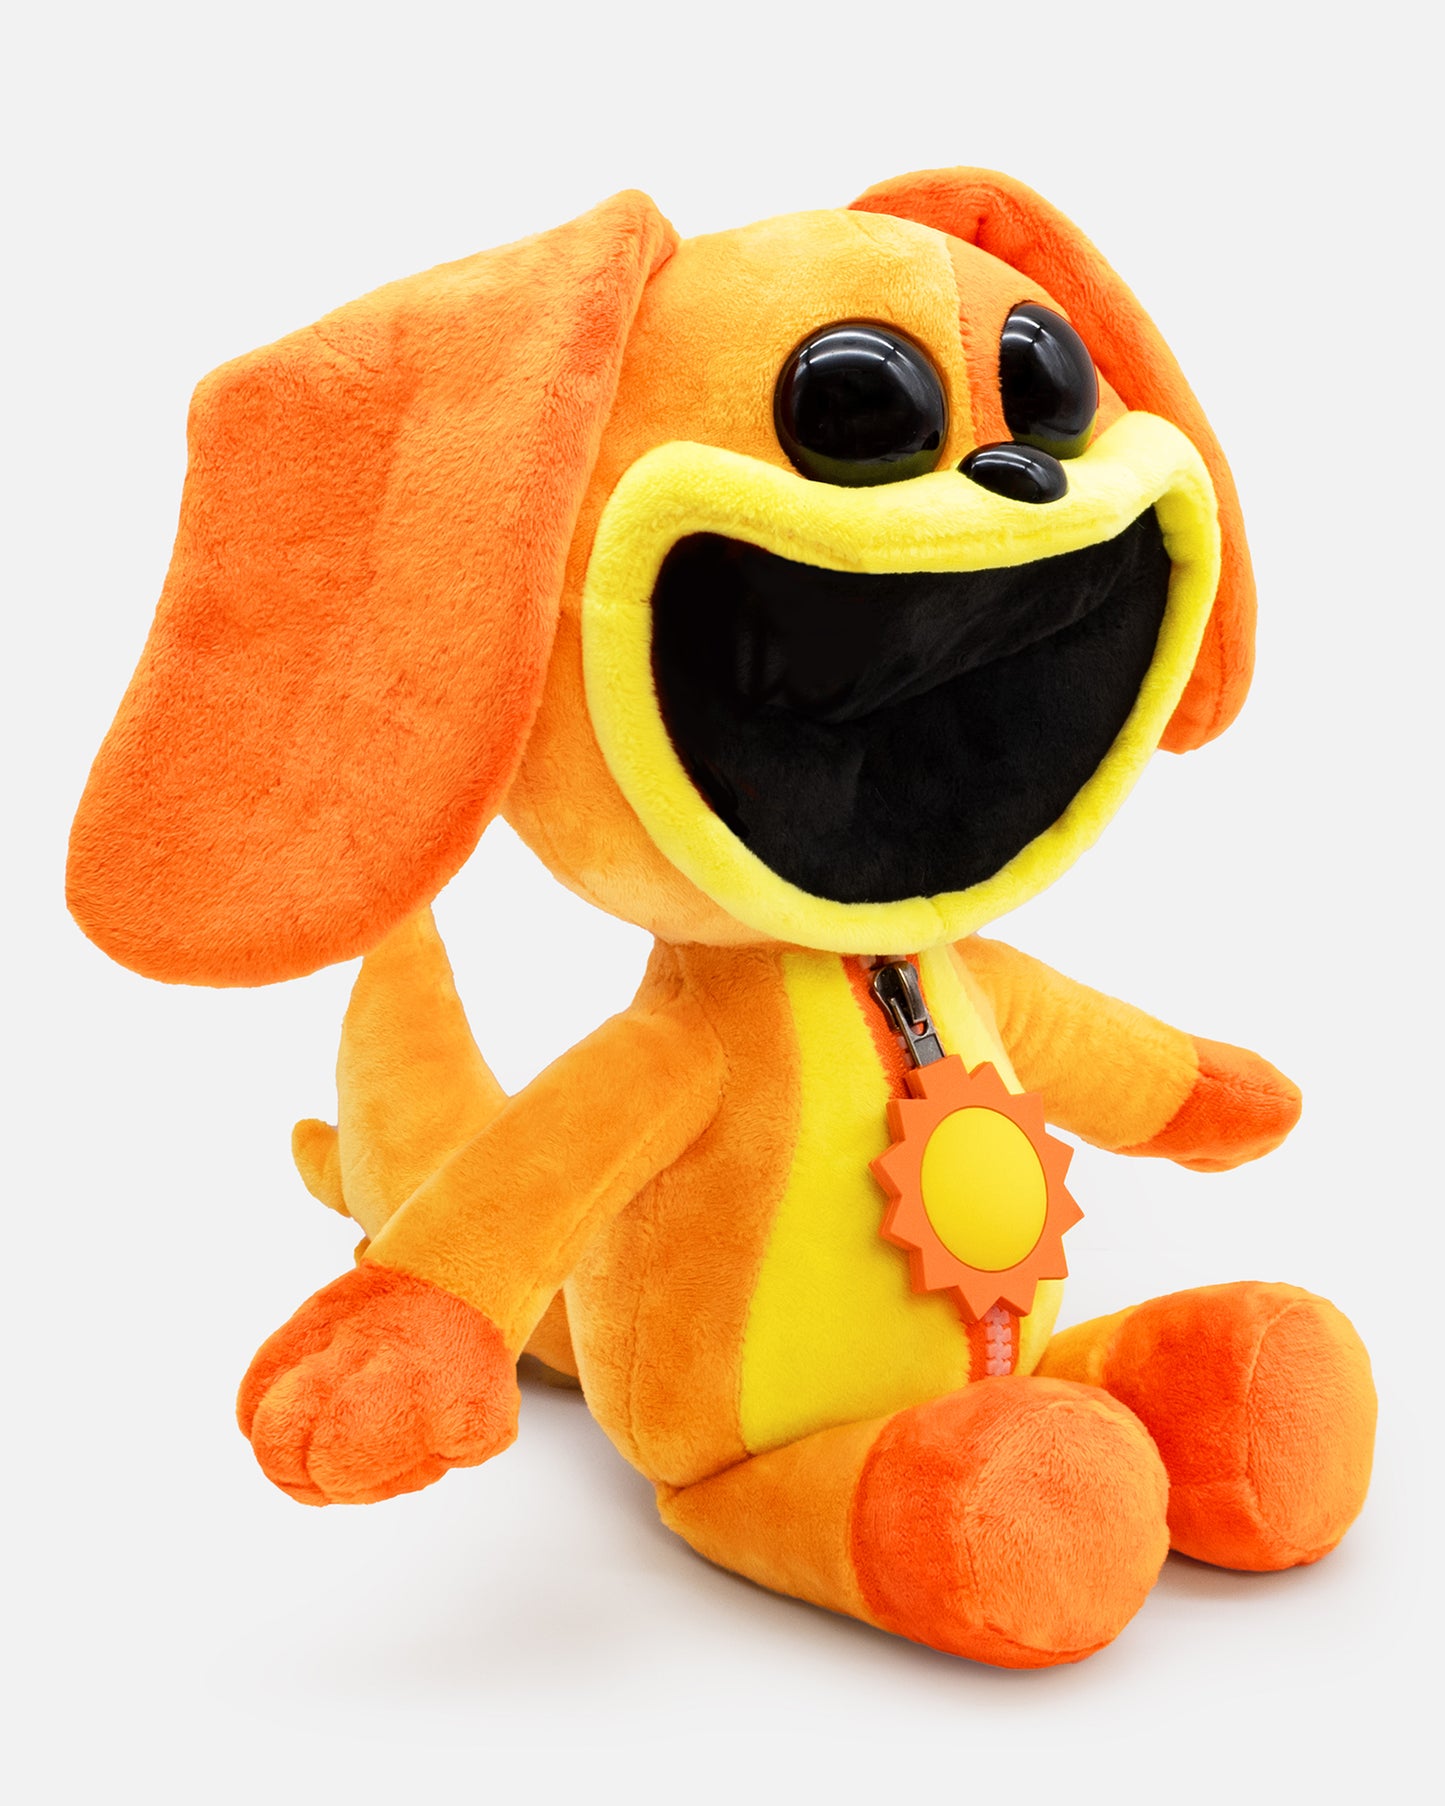 dogday plush. smiling dog plush with sun zipper. sitting facing right.